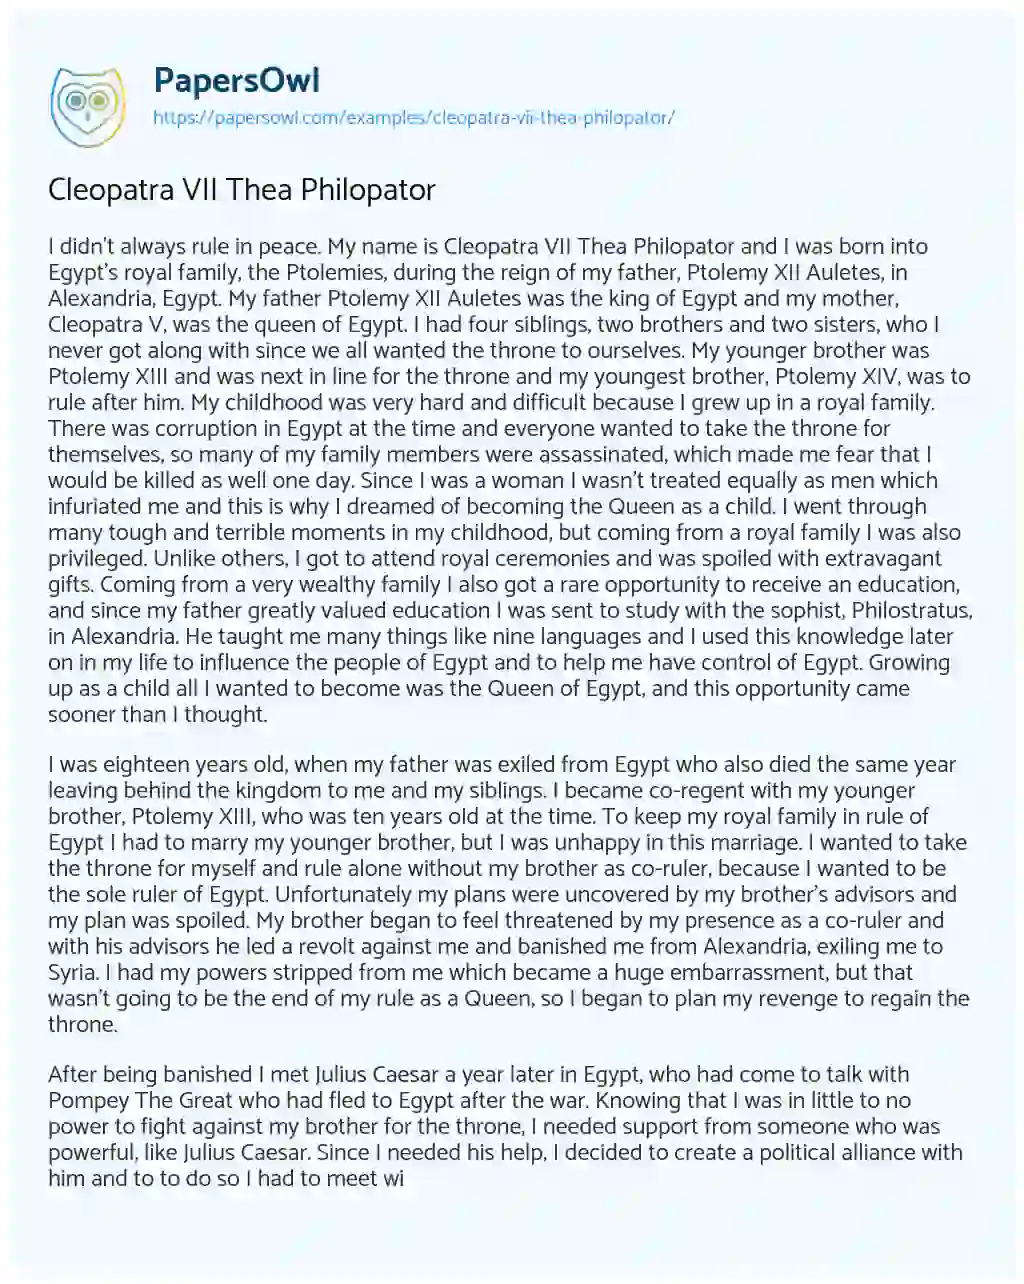 Essay on Cleopatra VII Thea Philopator